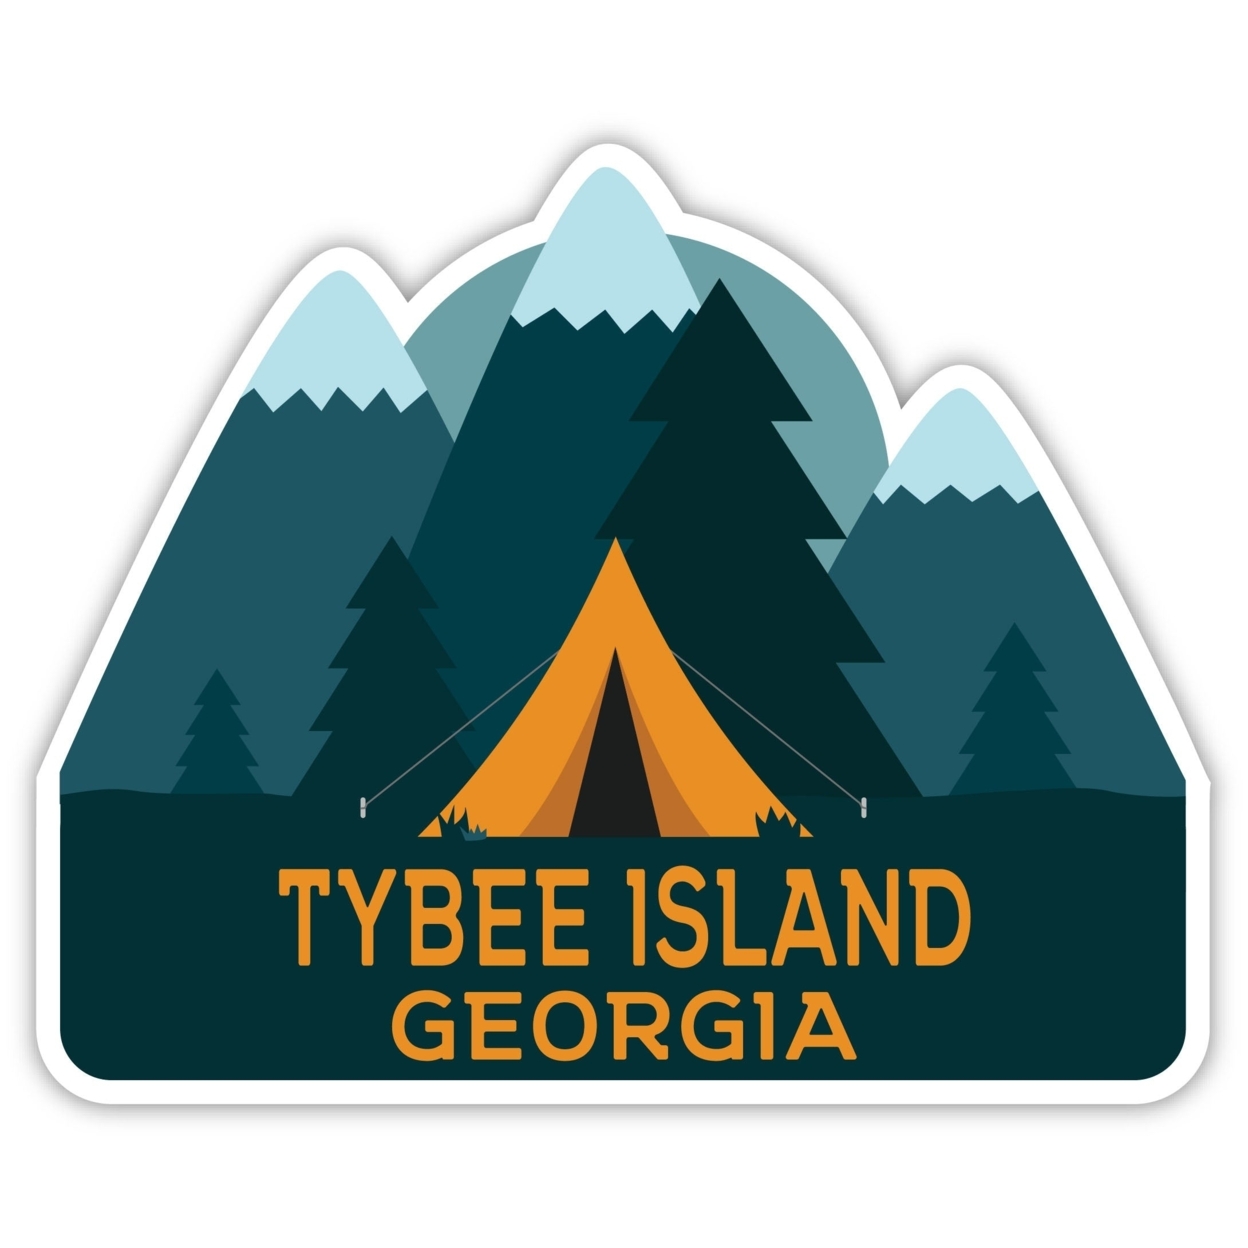 Tybee Island Georgia Souvenir Decorative Stickers (Choose Theme And Size) - Single Unit, 4-Inch, Camp Life